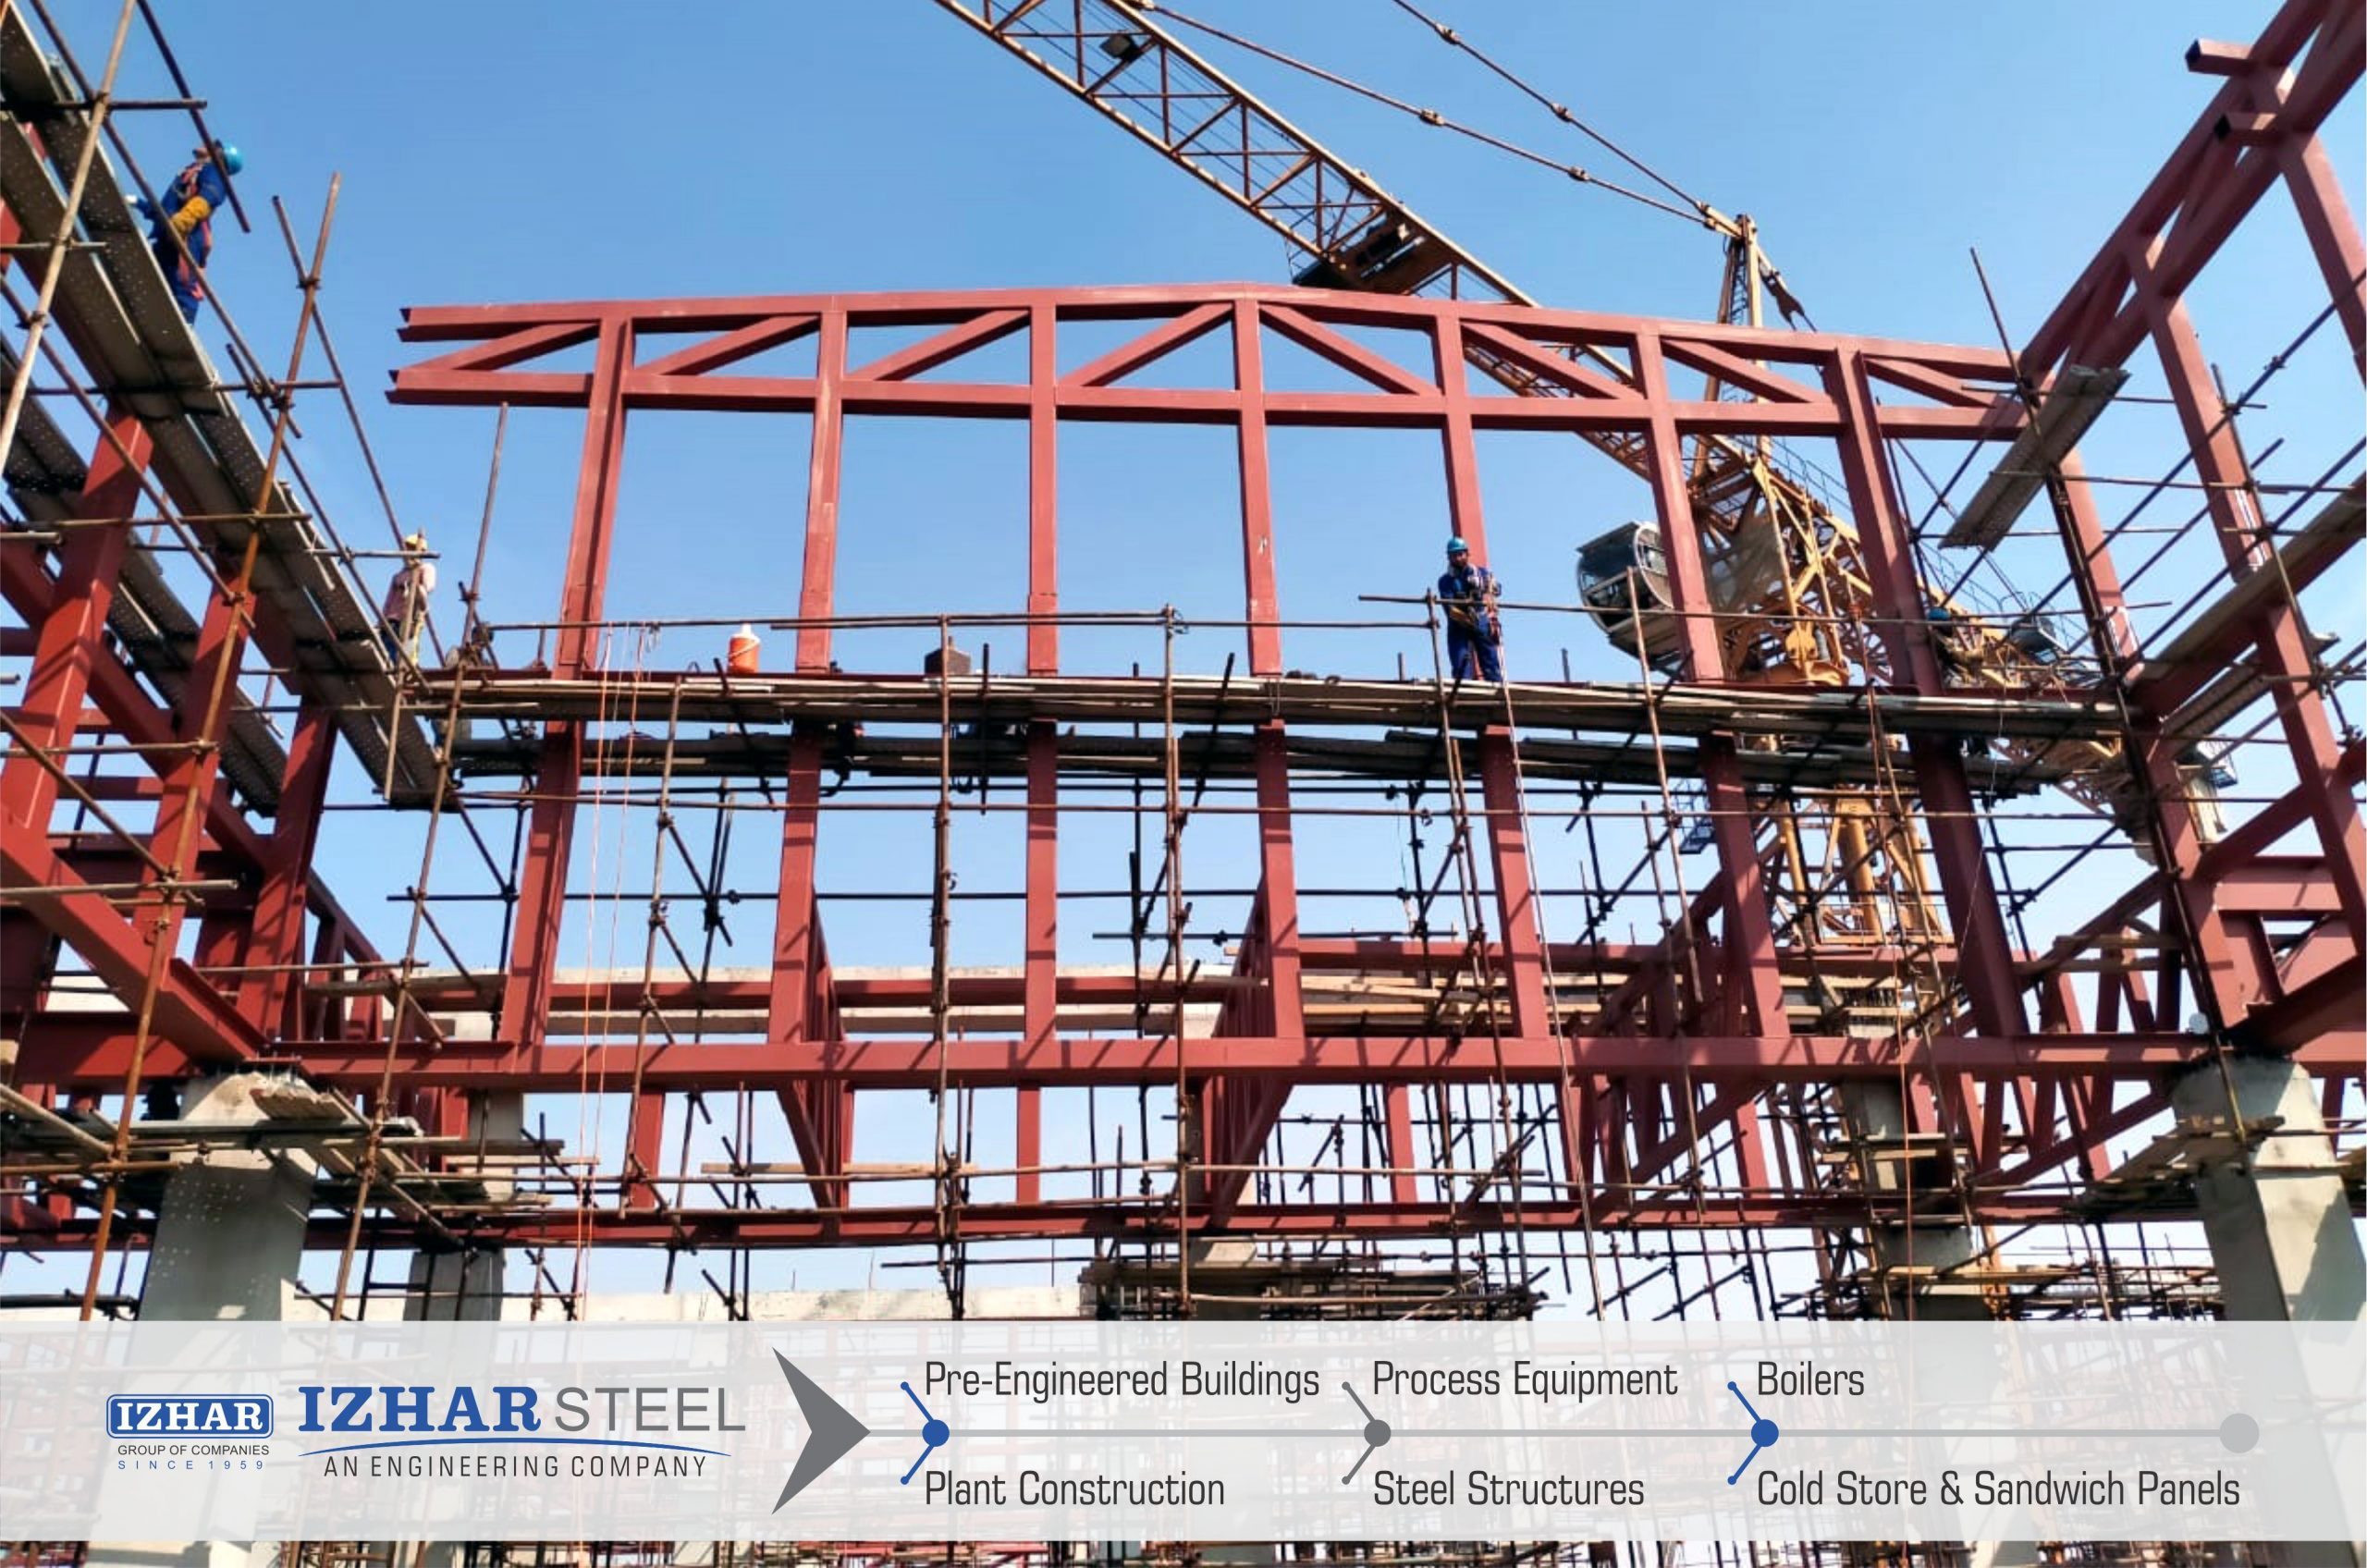 Project Izhar Steel